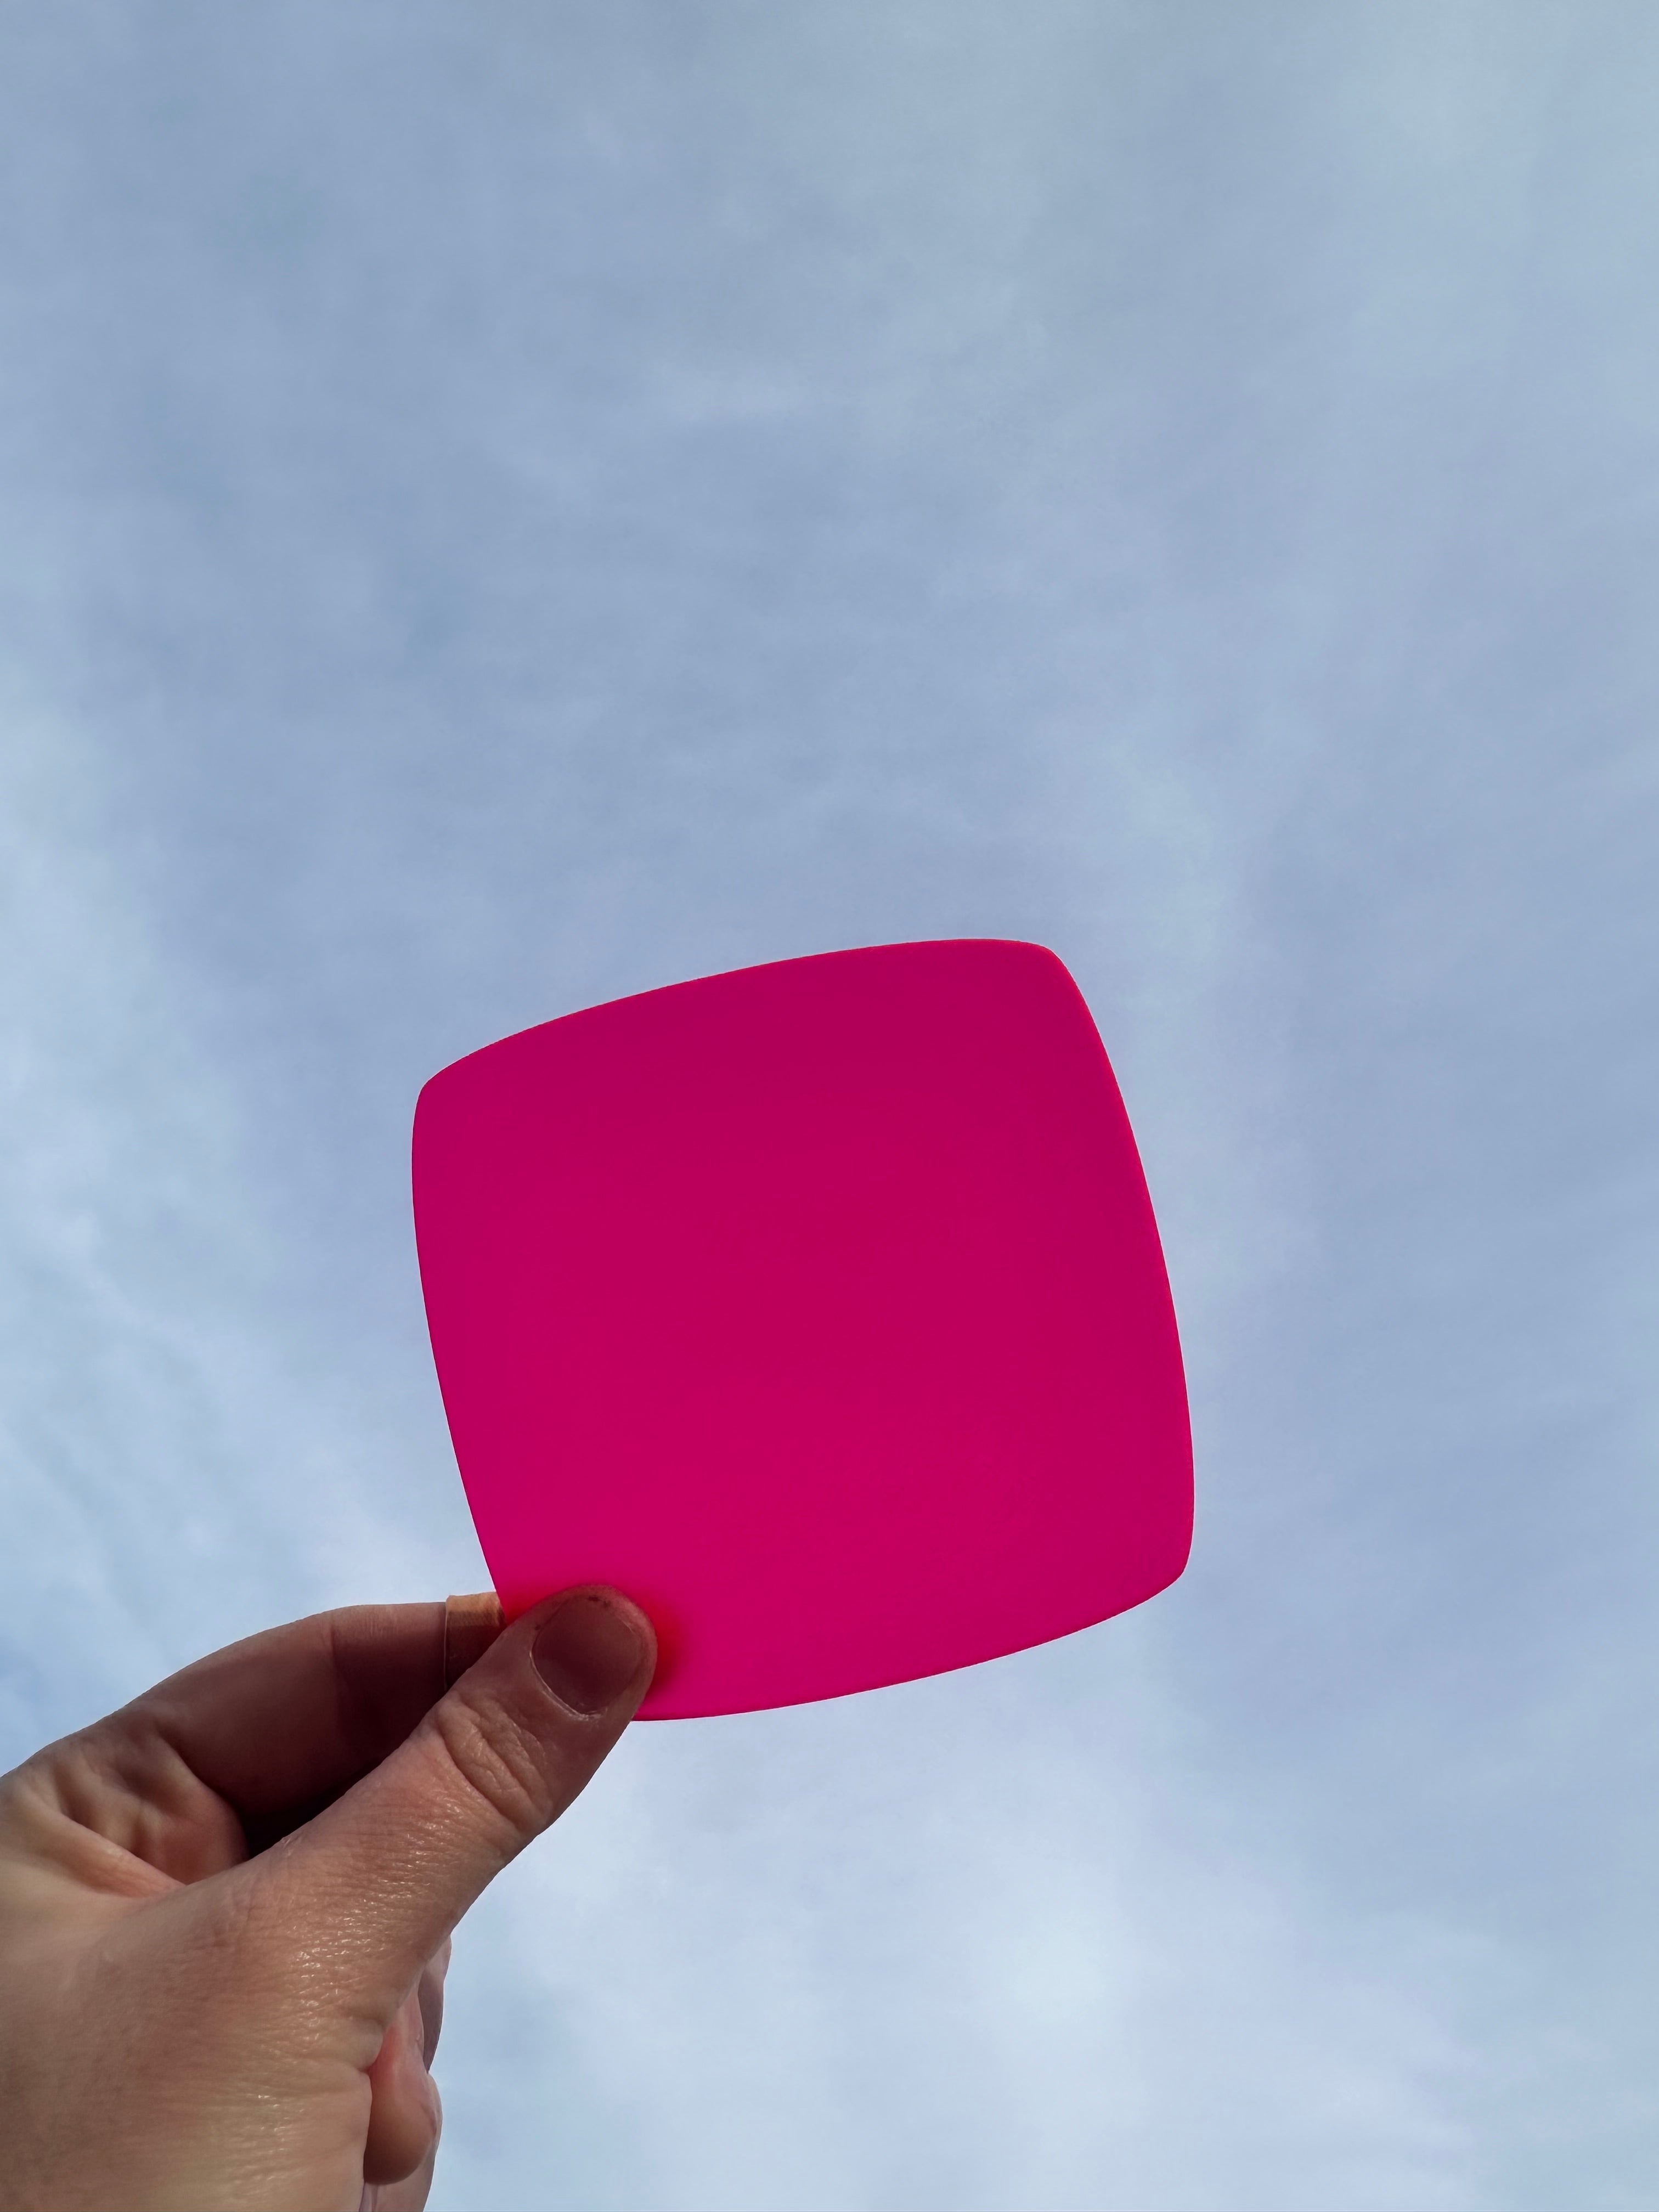 Pink Fluorescent Acrylic Sheet – Presentation Plastics